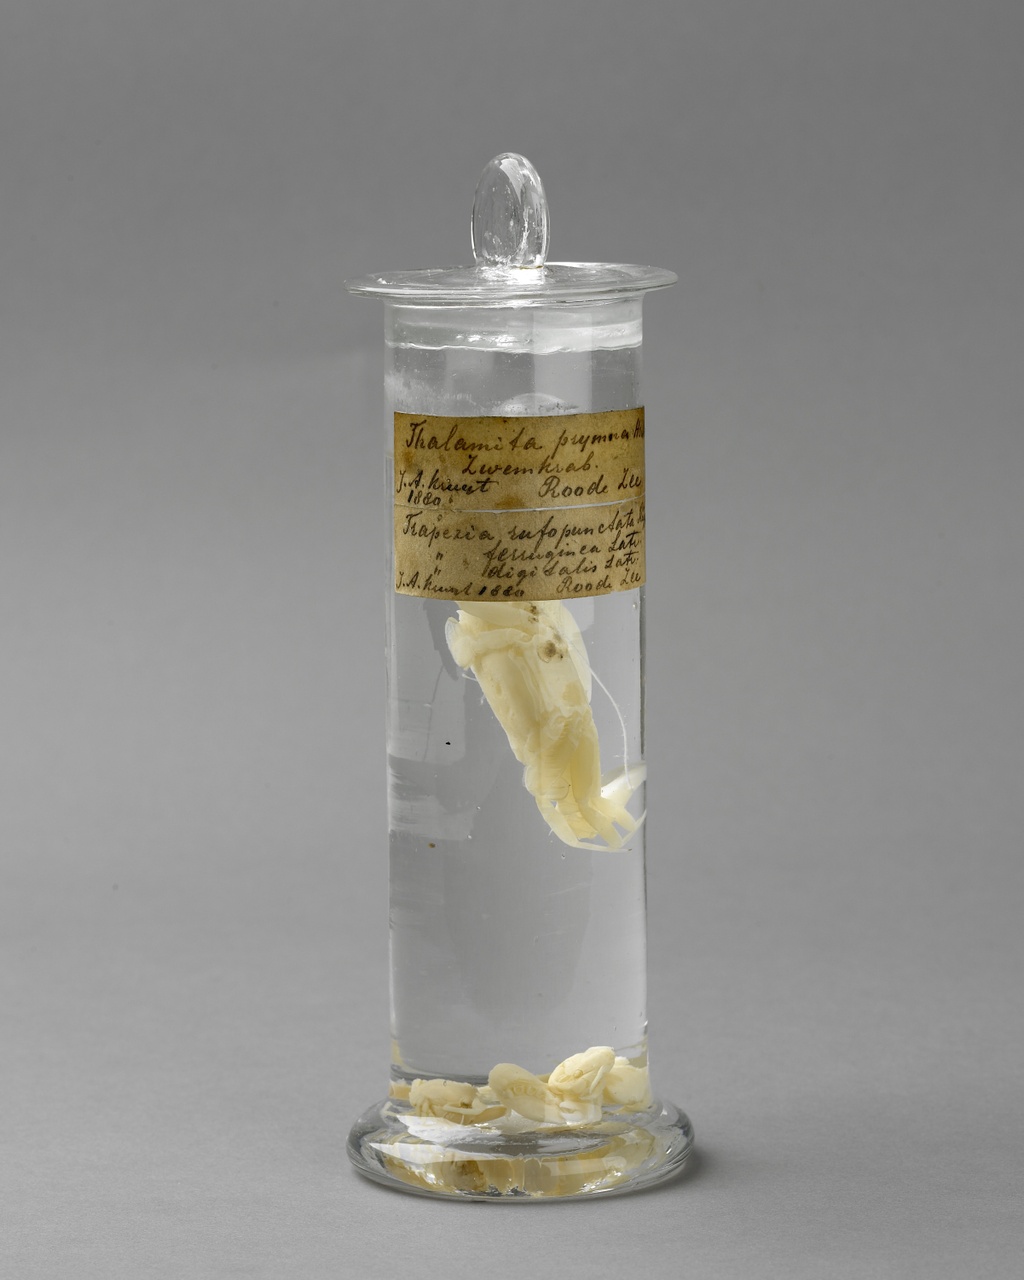 Thalamita prymna (Herbst, 1803), Soort zwemkrab, alcoholpreparaat